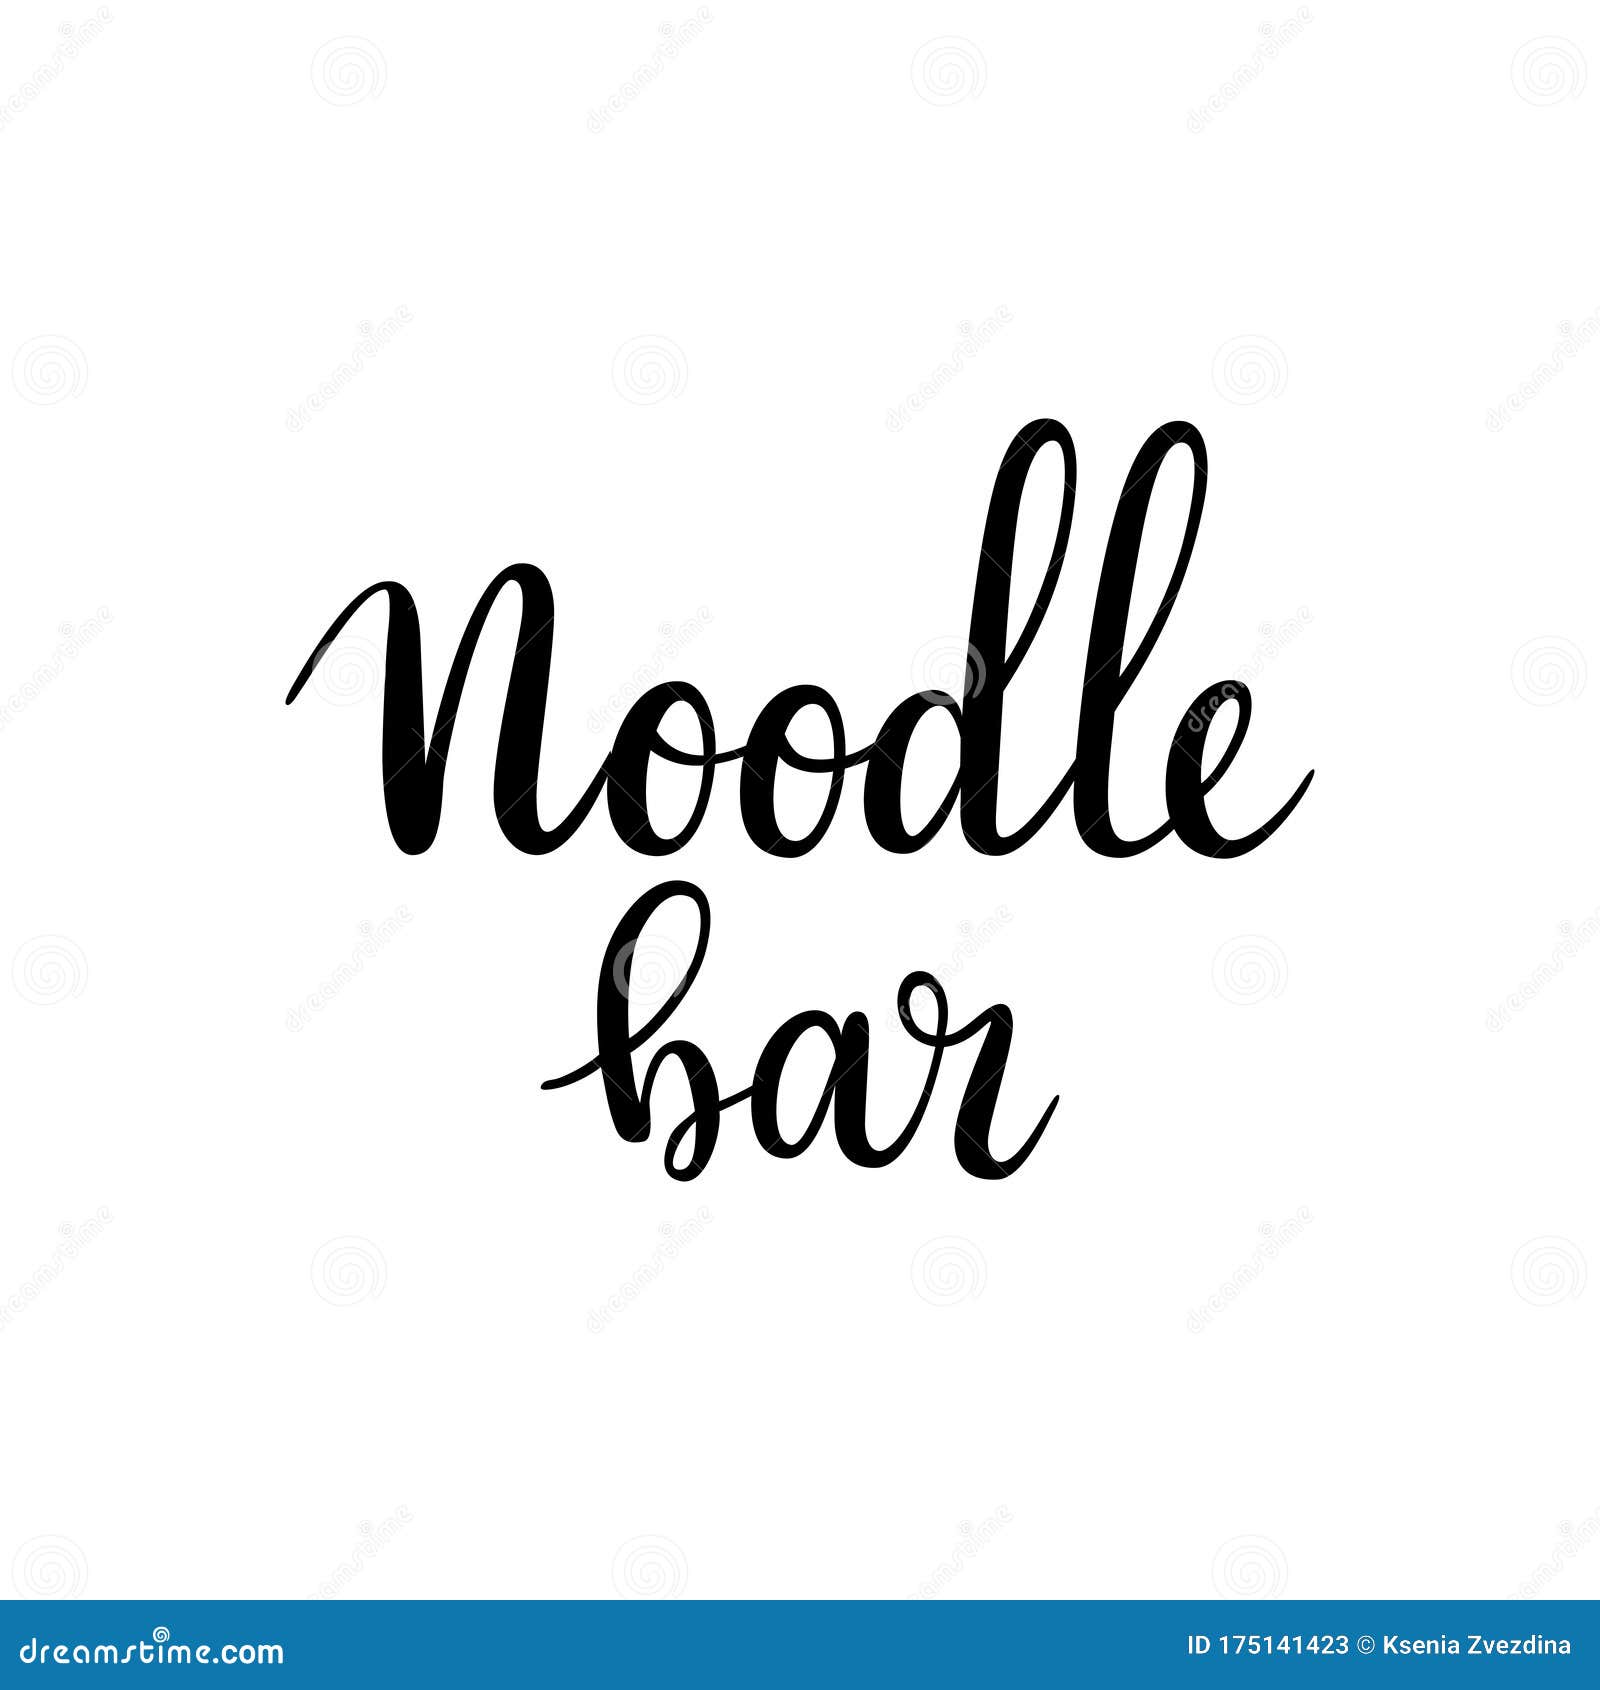 noodle bar logo, handwritten lettering logotype, good for cafe, noodle shop or ramen shop, modern calligraphy writing